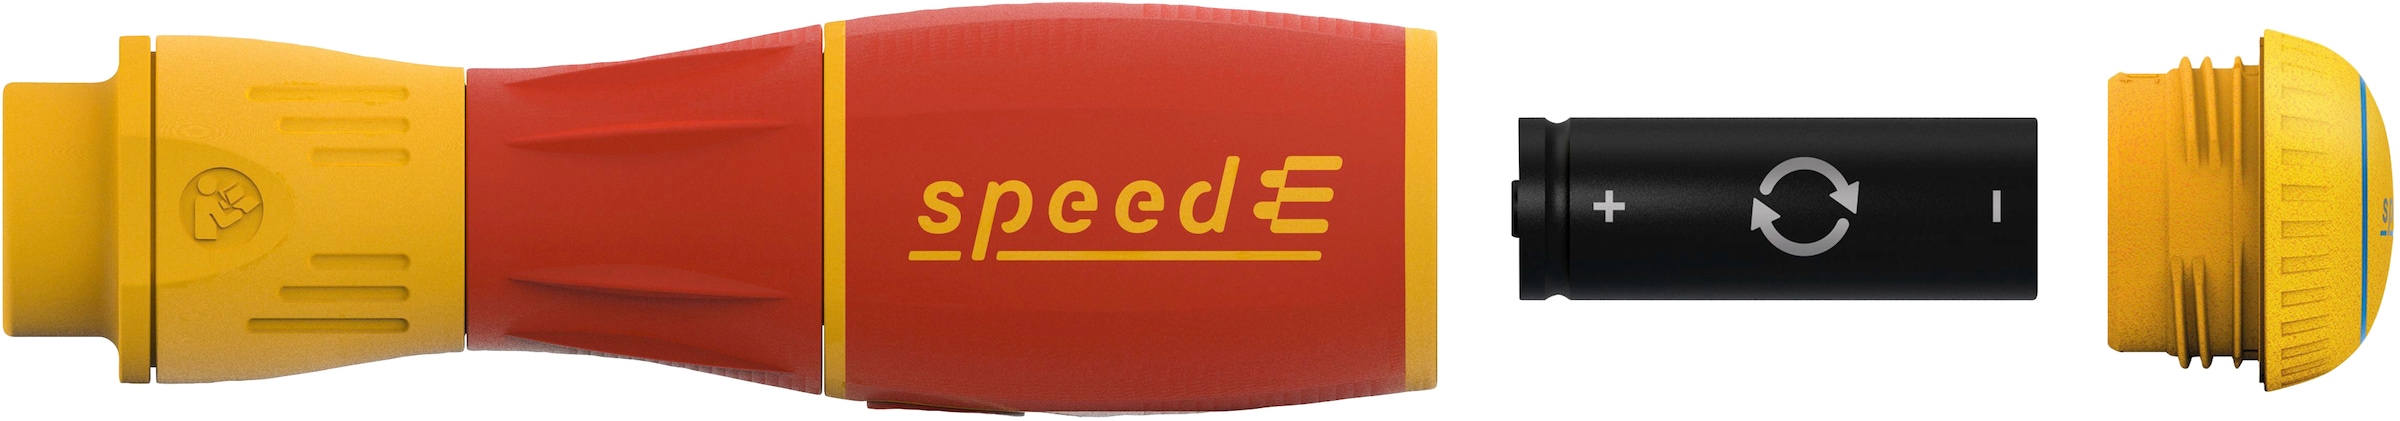 Wiha Schraubendreher »E-Schraubendreher speedE® II electric (44318)«, (Set), 7-tlg. mit slimBits, Batterien und USB-Ladegerät in L-Boxx Mini